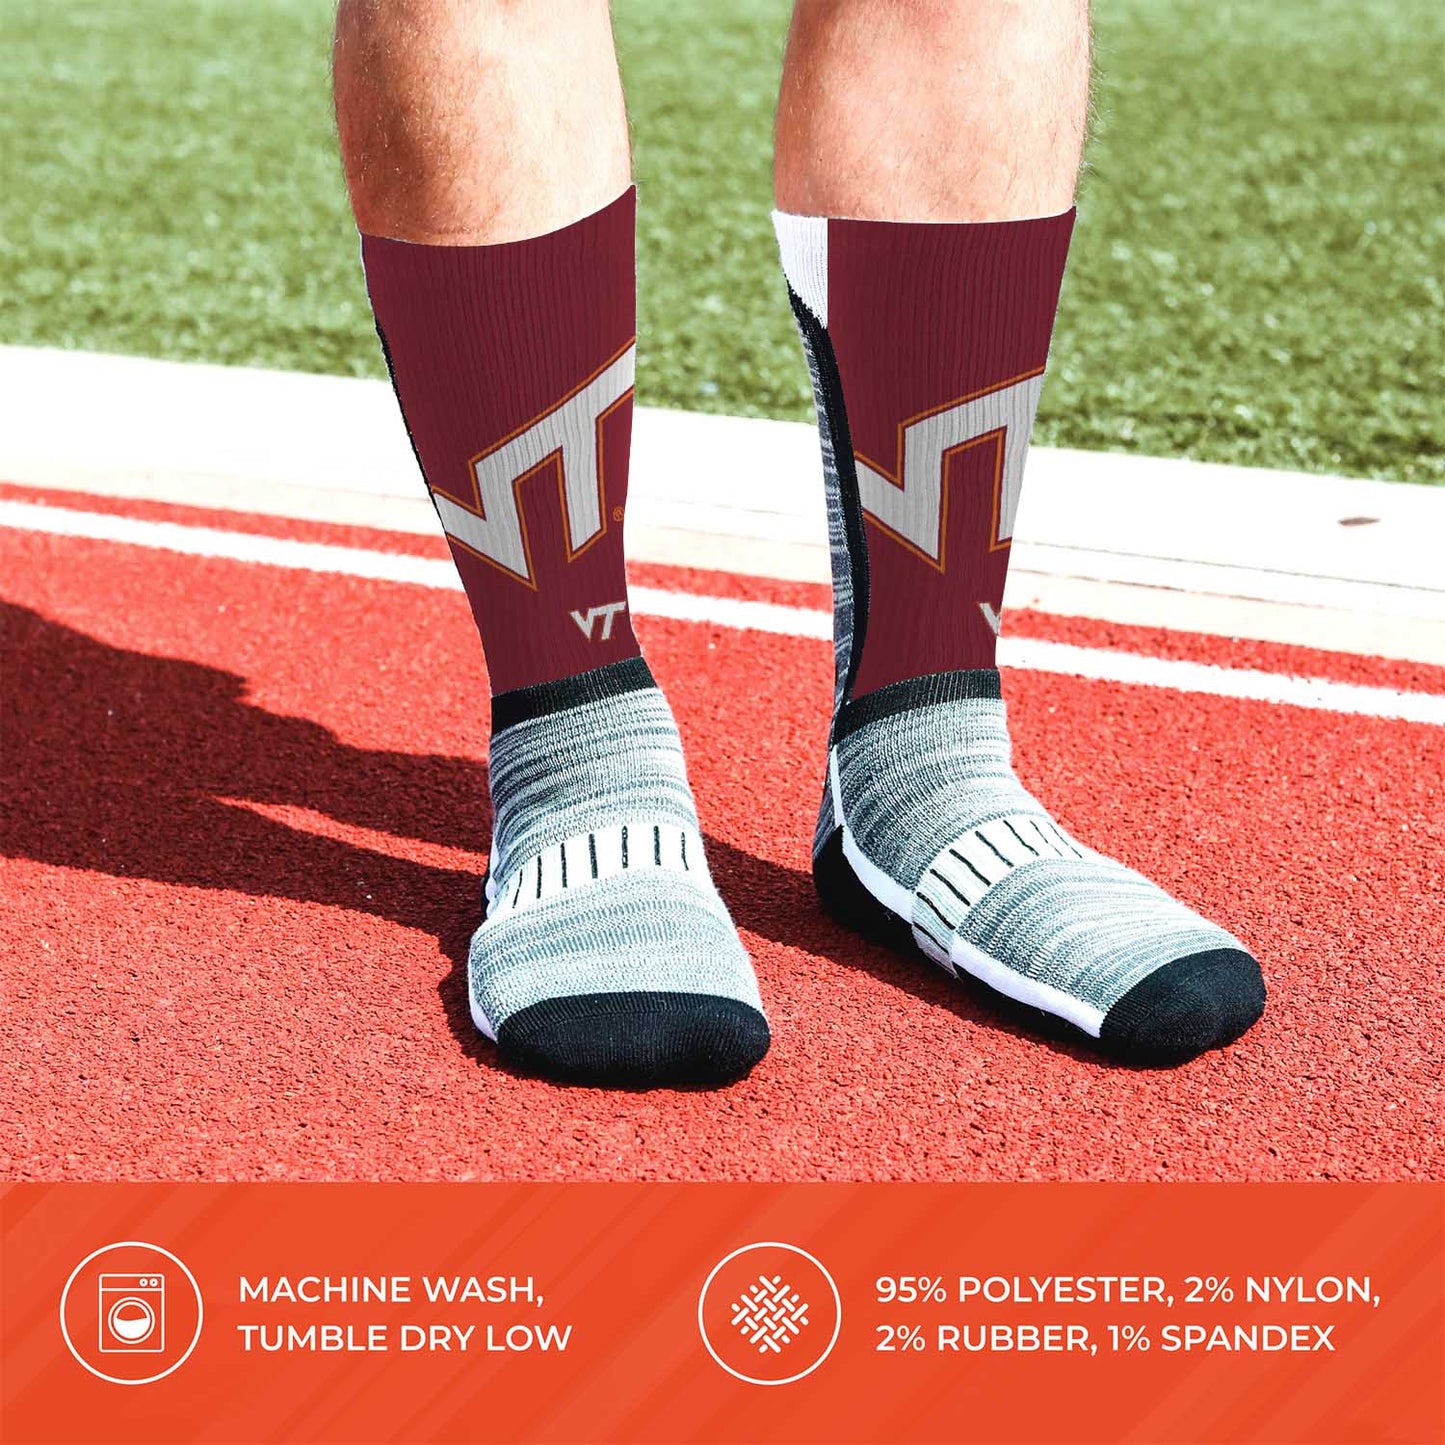 Virginia Tech Hokies NCAA Youth University Socks - Maroon